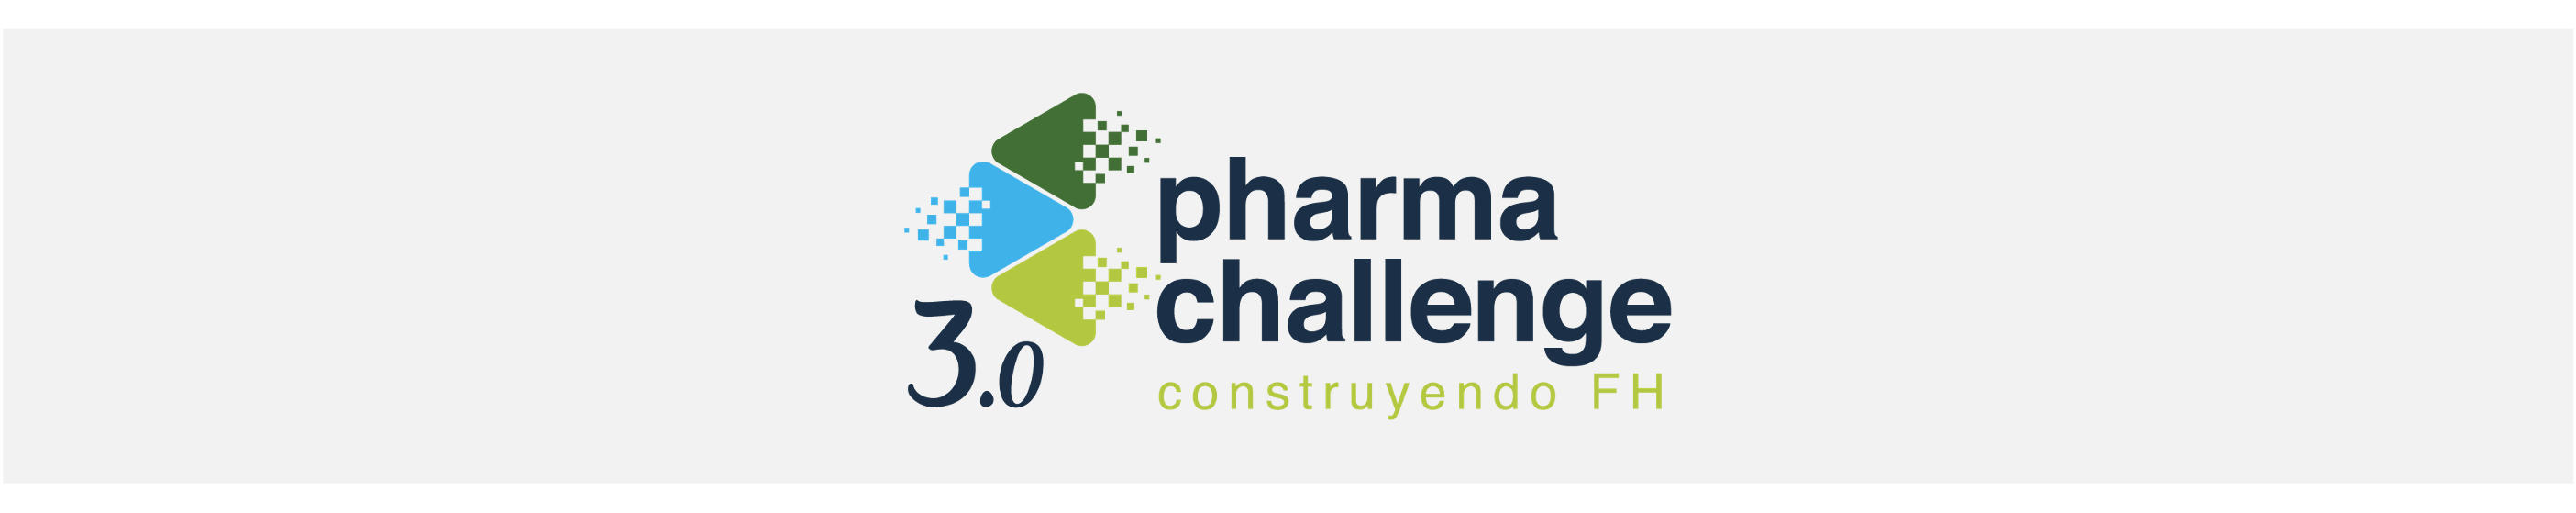 Banner Pharma Challenge